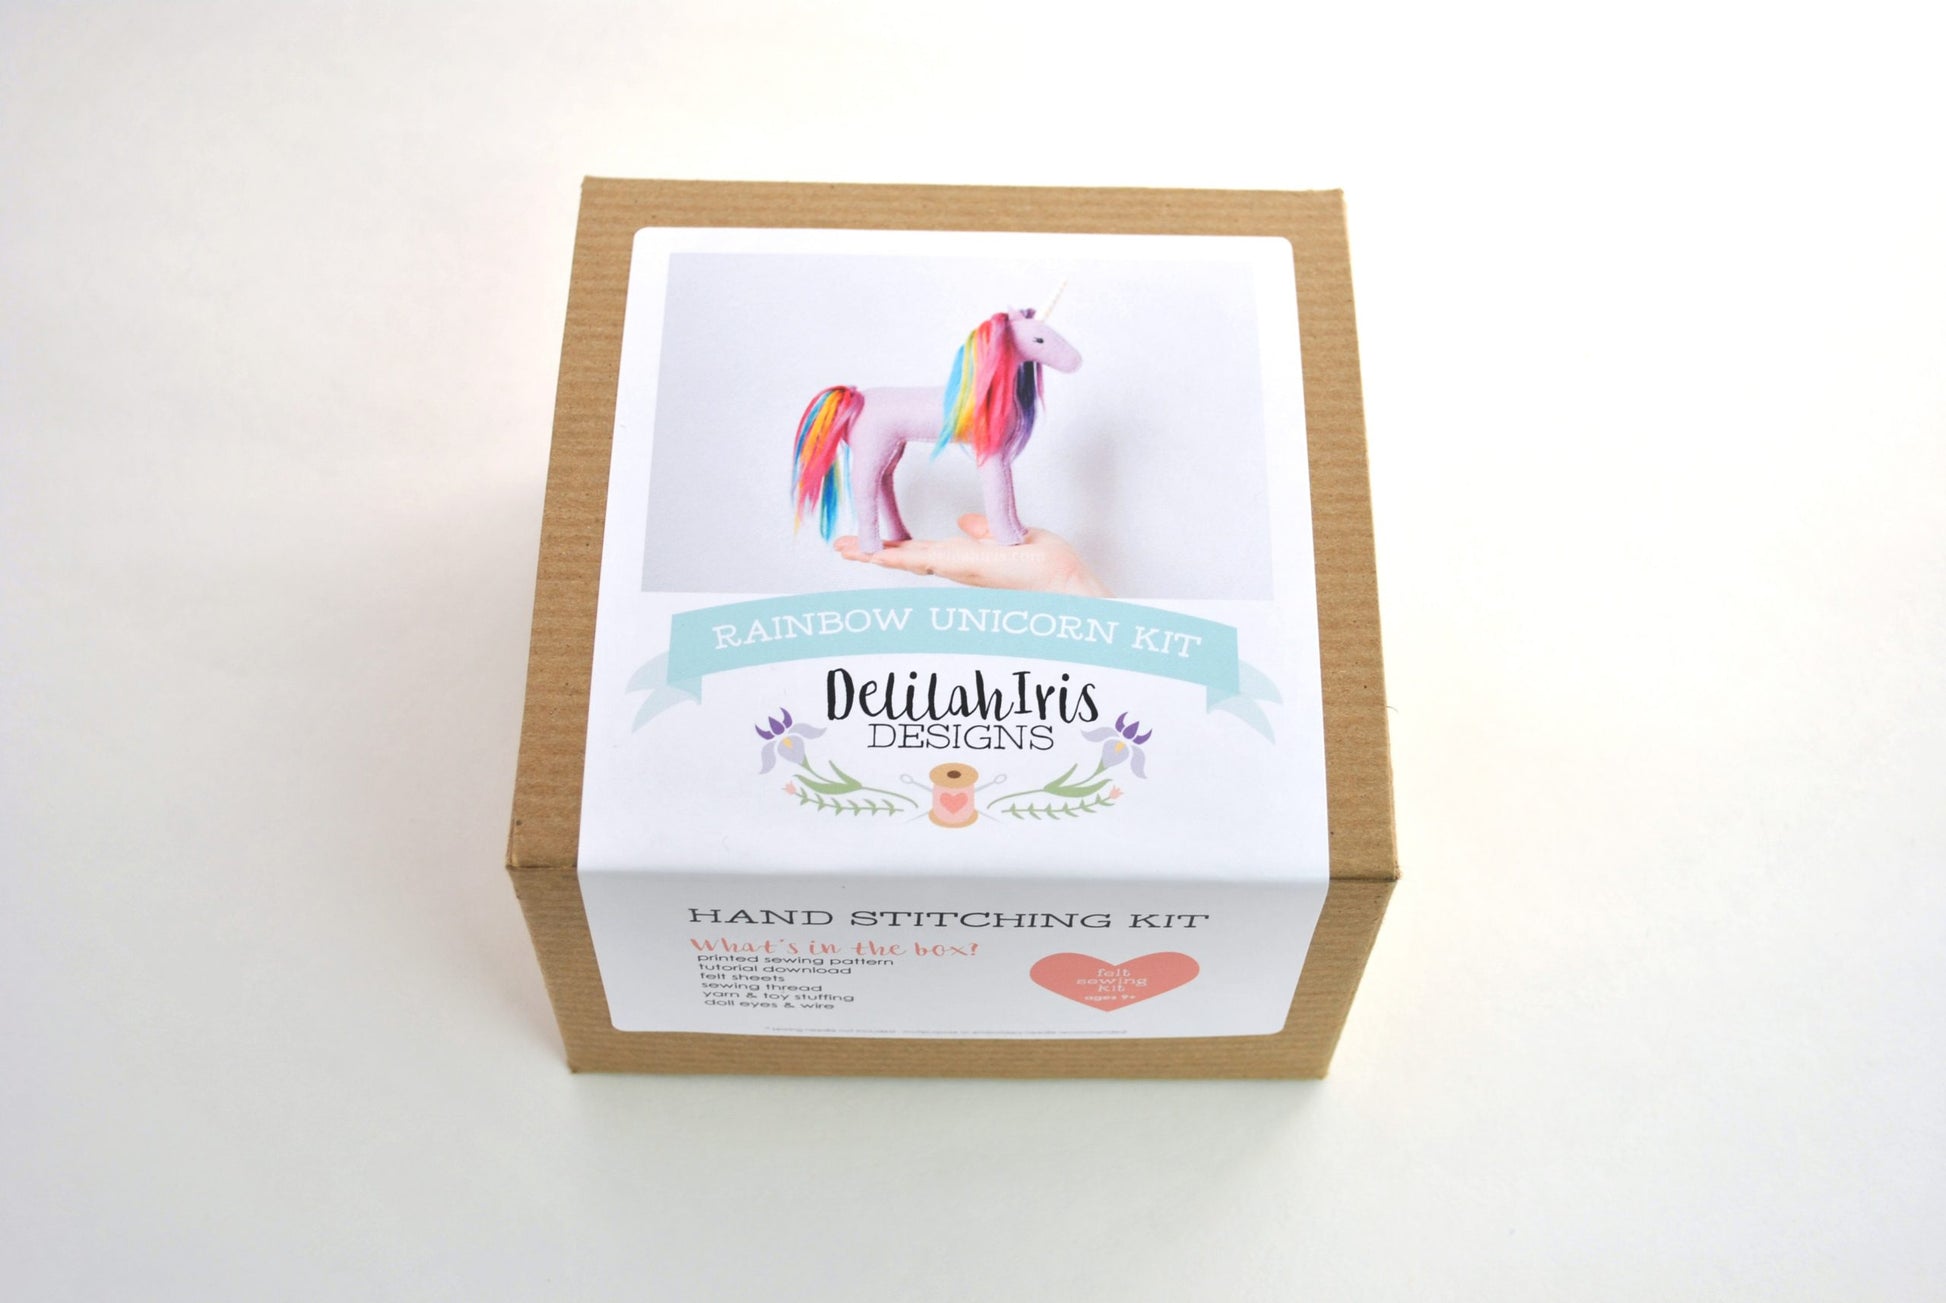 Delilah Iris Designs - DIY Craft Kit - Rainbow Unicorn